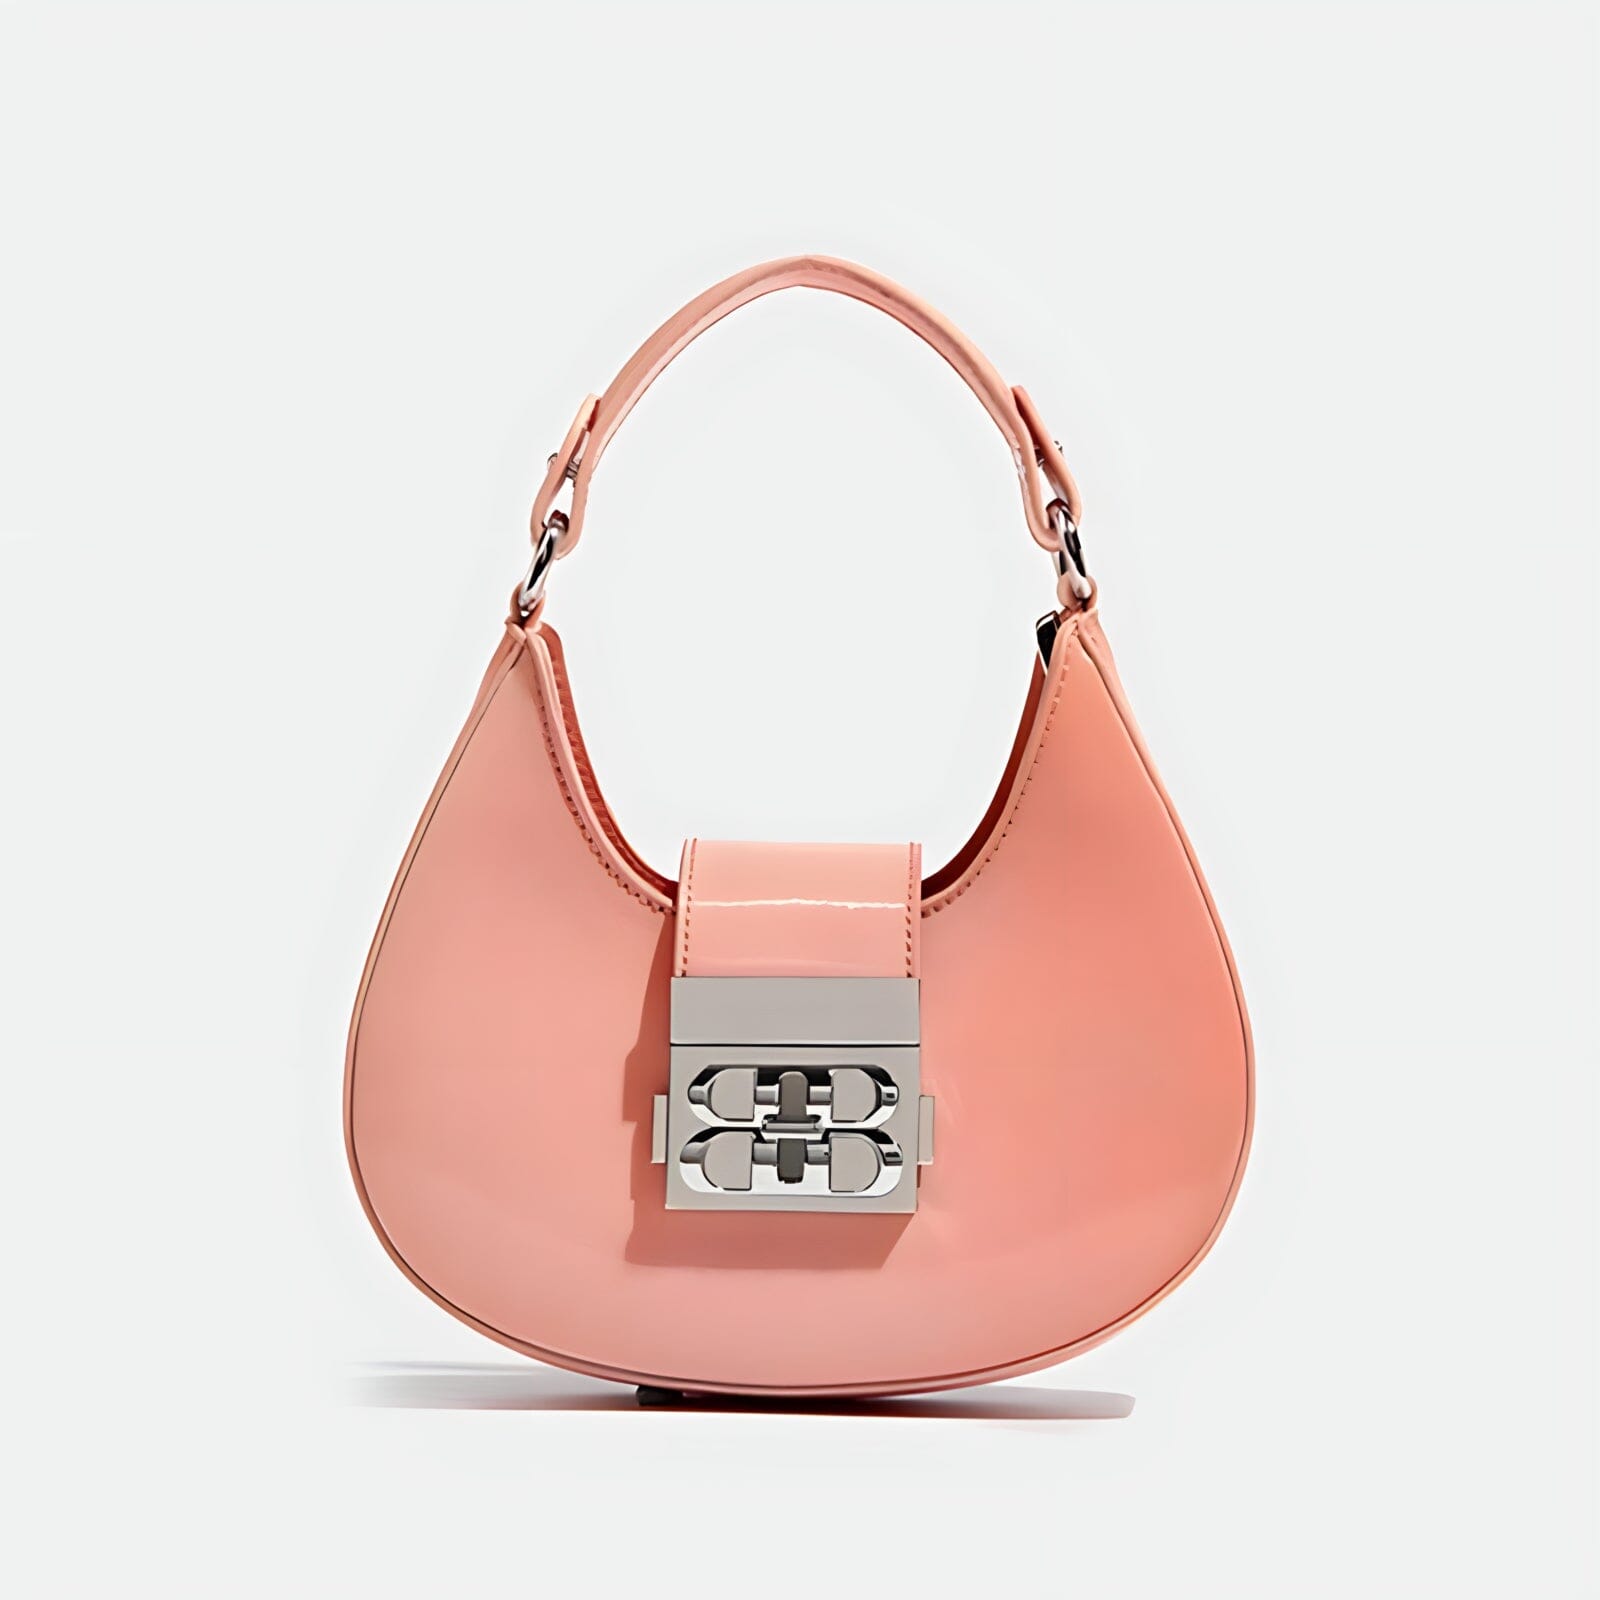 The Crescent Handbag Purse - Multiple Colors 0 SA Styles Salmon 